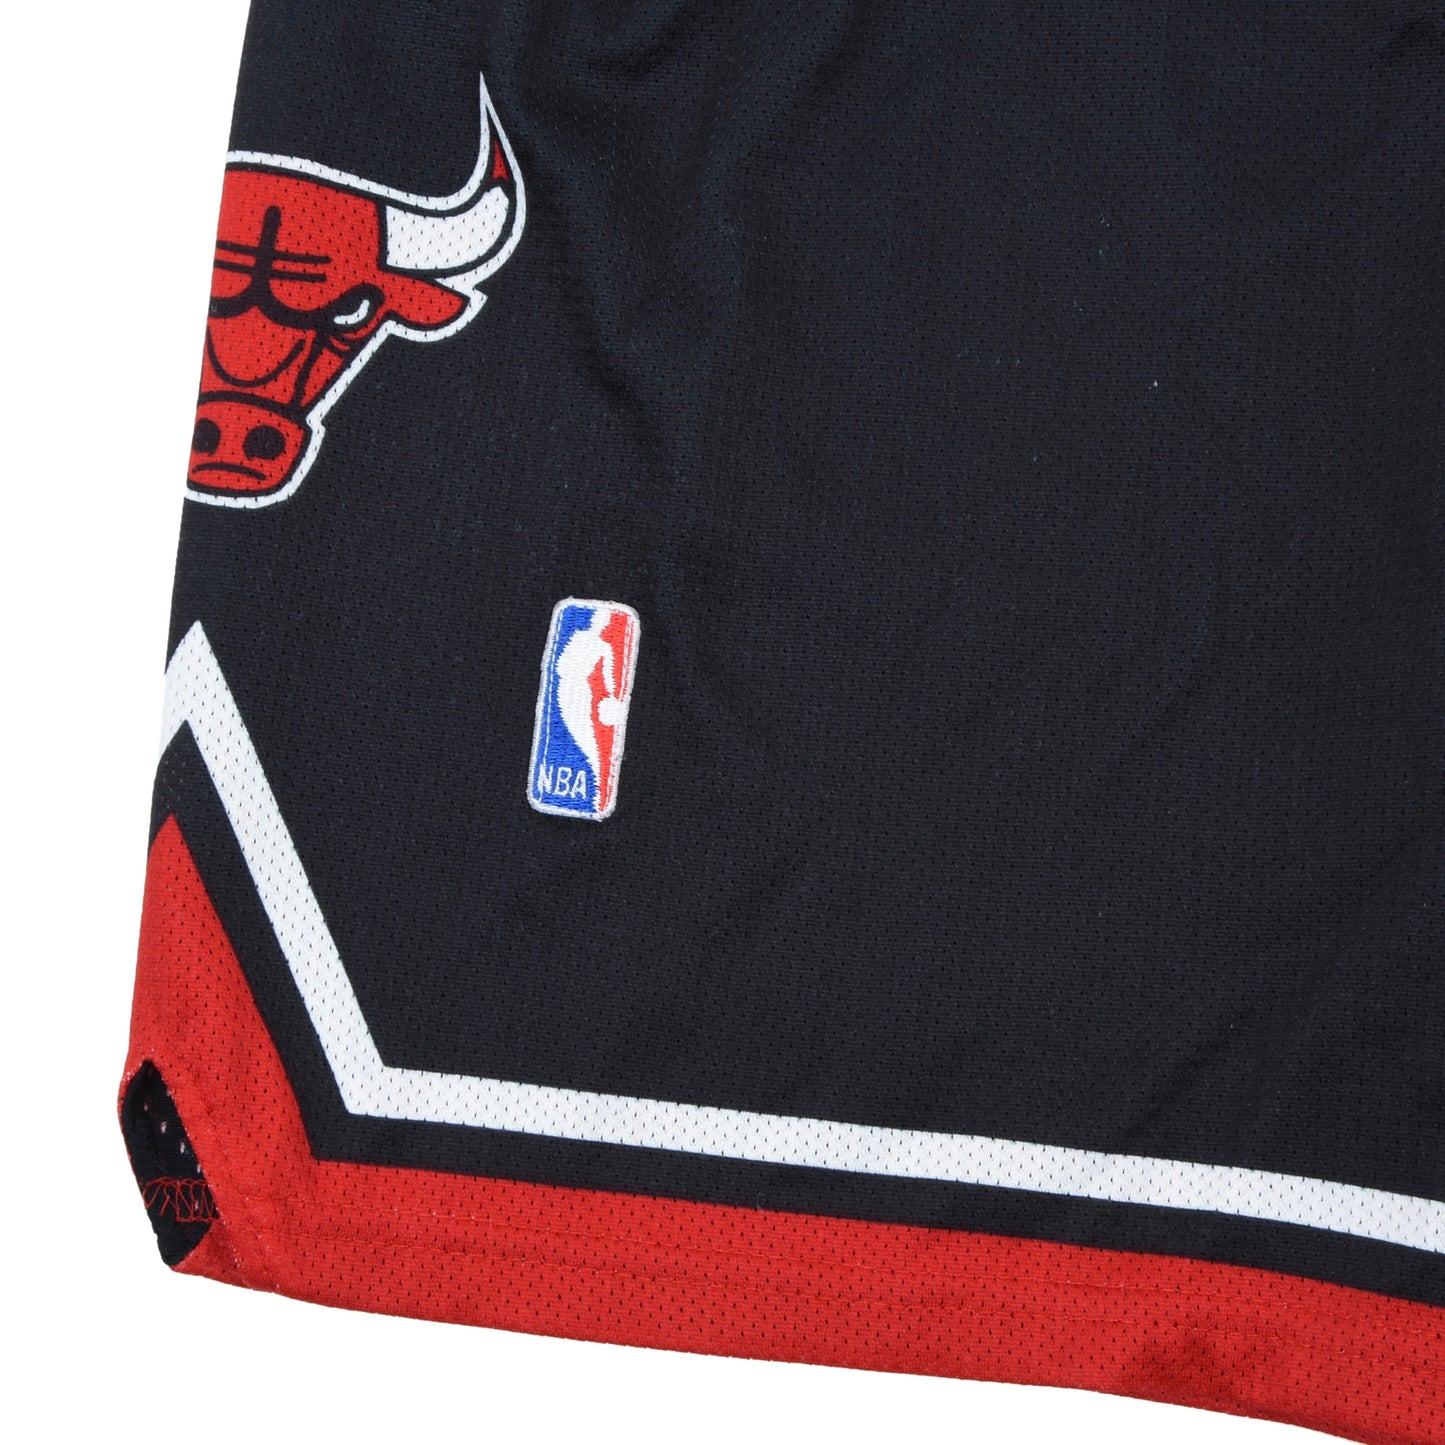 Vintage Champion/Chicago Bulls 1990s Away Shorts Size S - Black